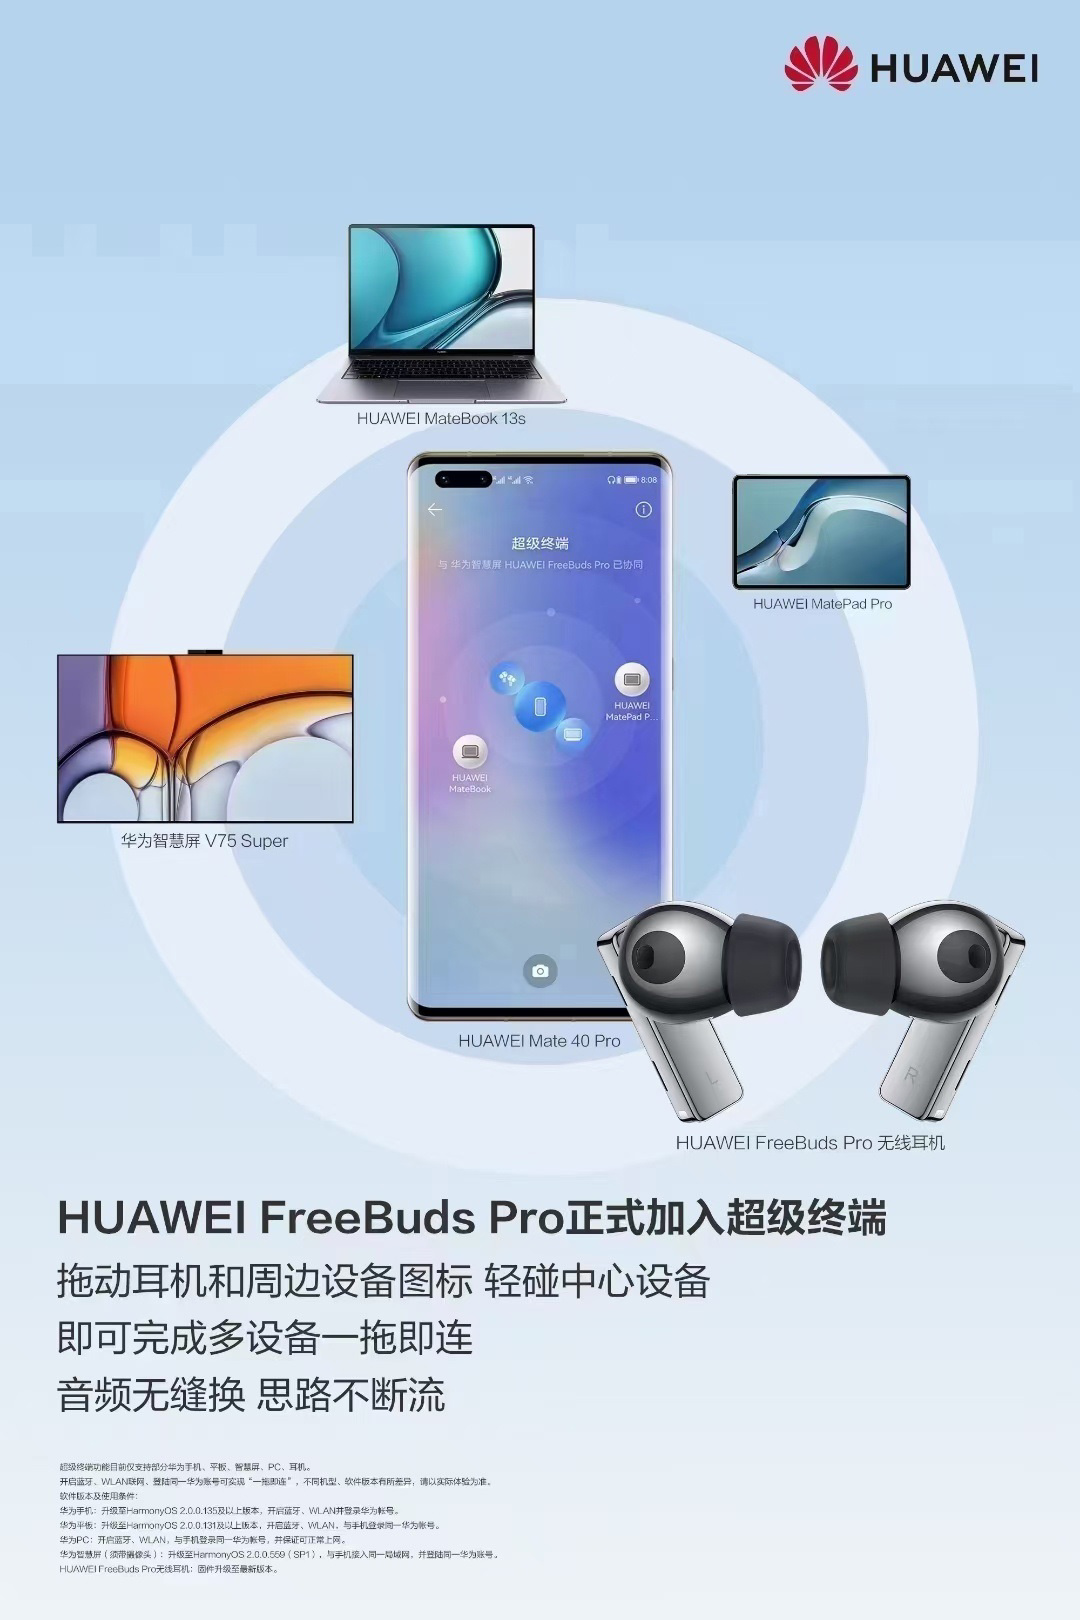 Huawei FreeBuds Pro joins the HarmonyOS system super terminal